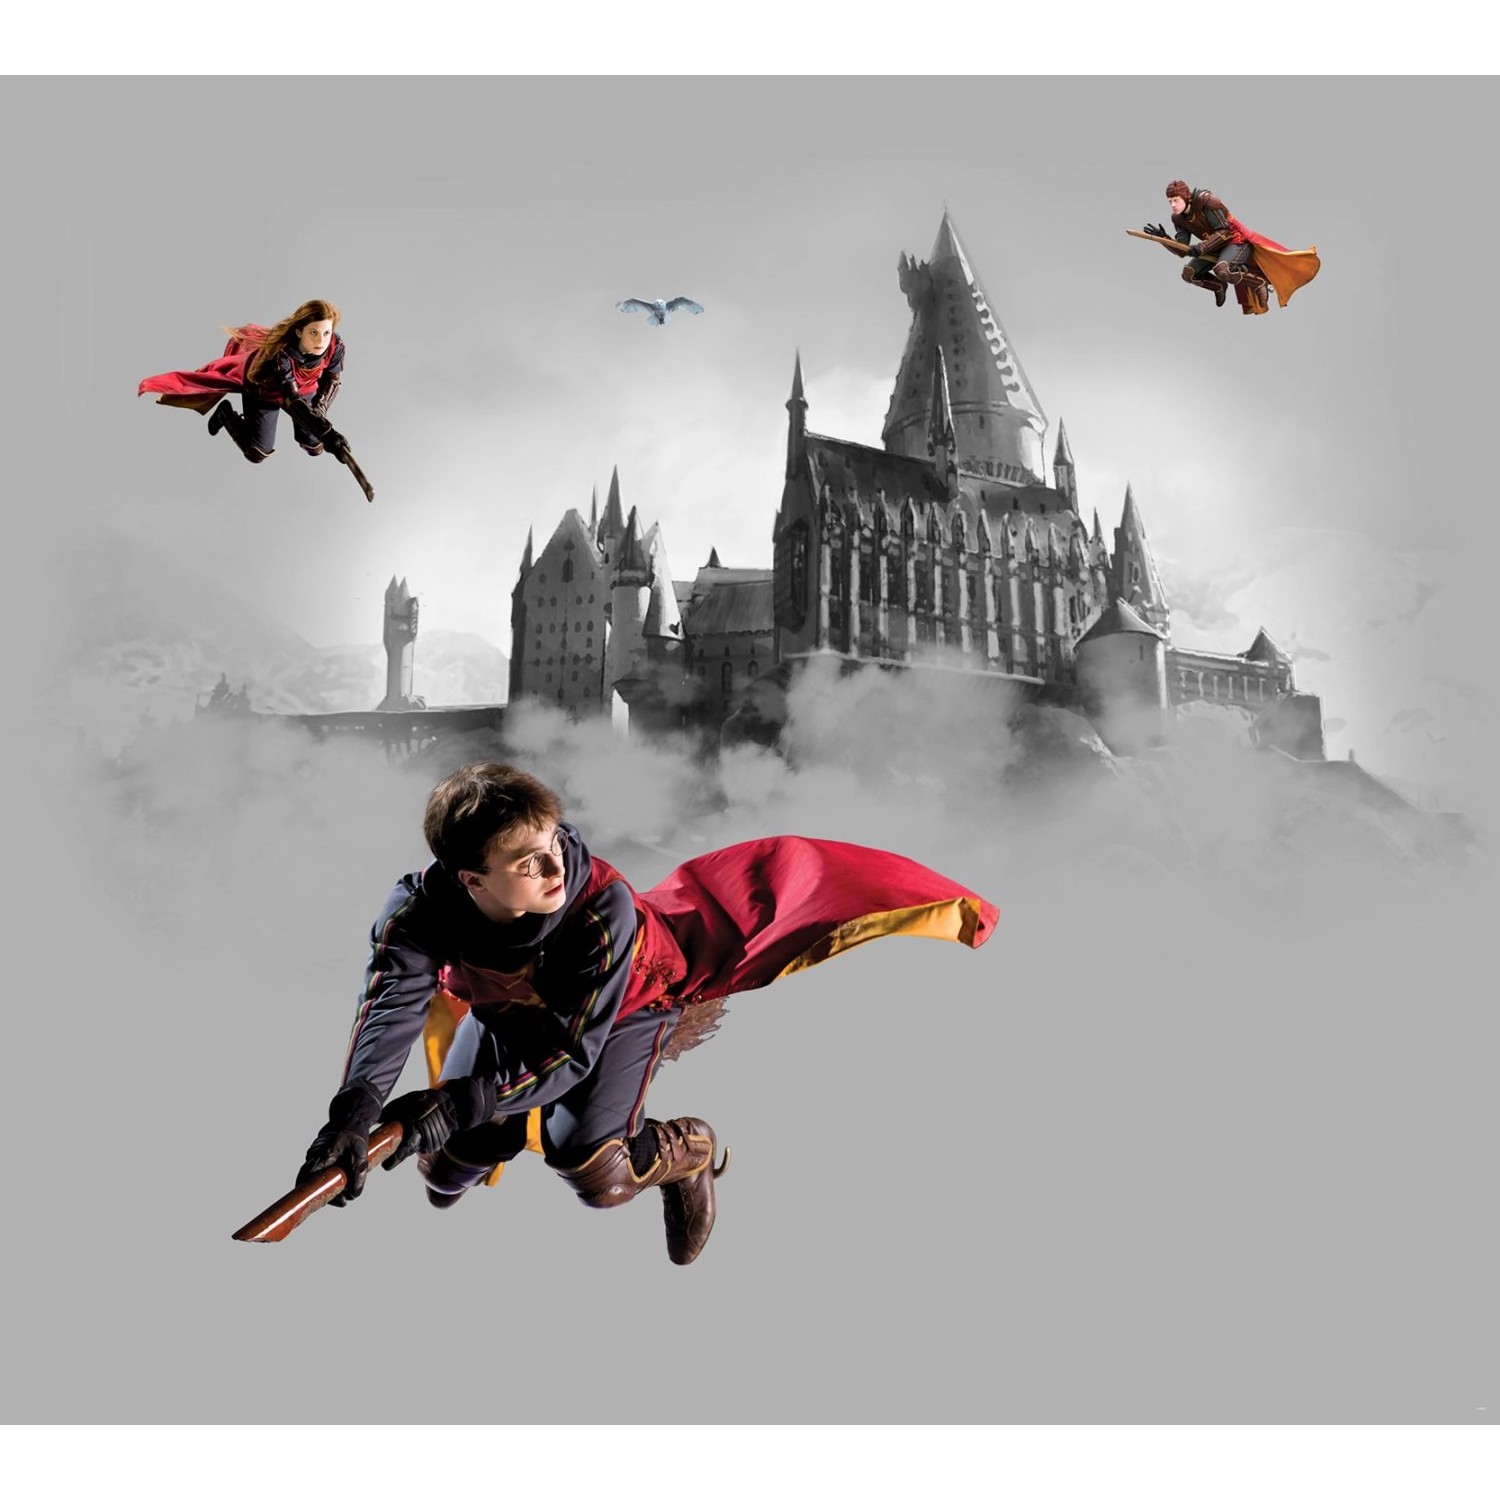 Sanders & Sanders Fototapete Harry Potter Hogwarts Grau und Rot 3 x 2,7 m 6 günstig online kaufen